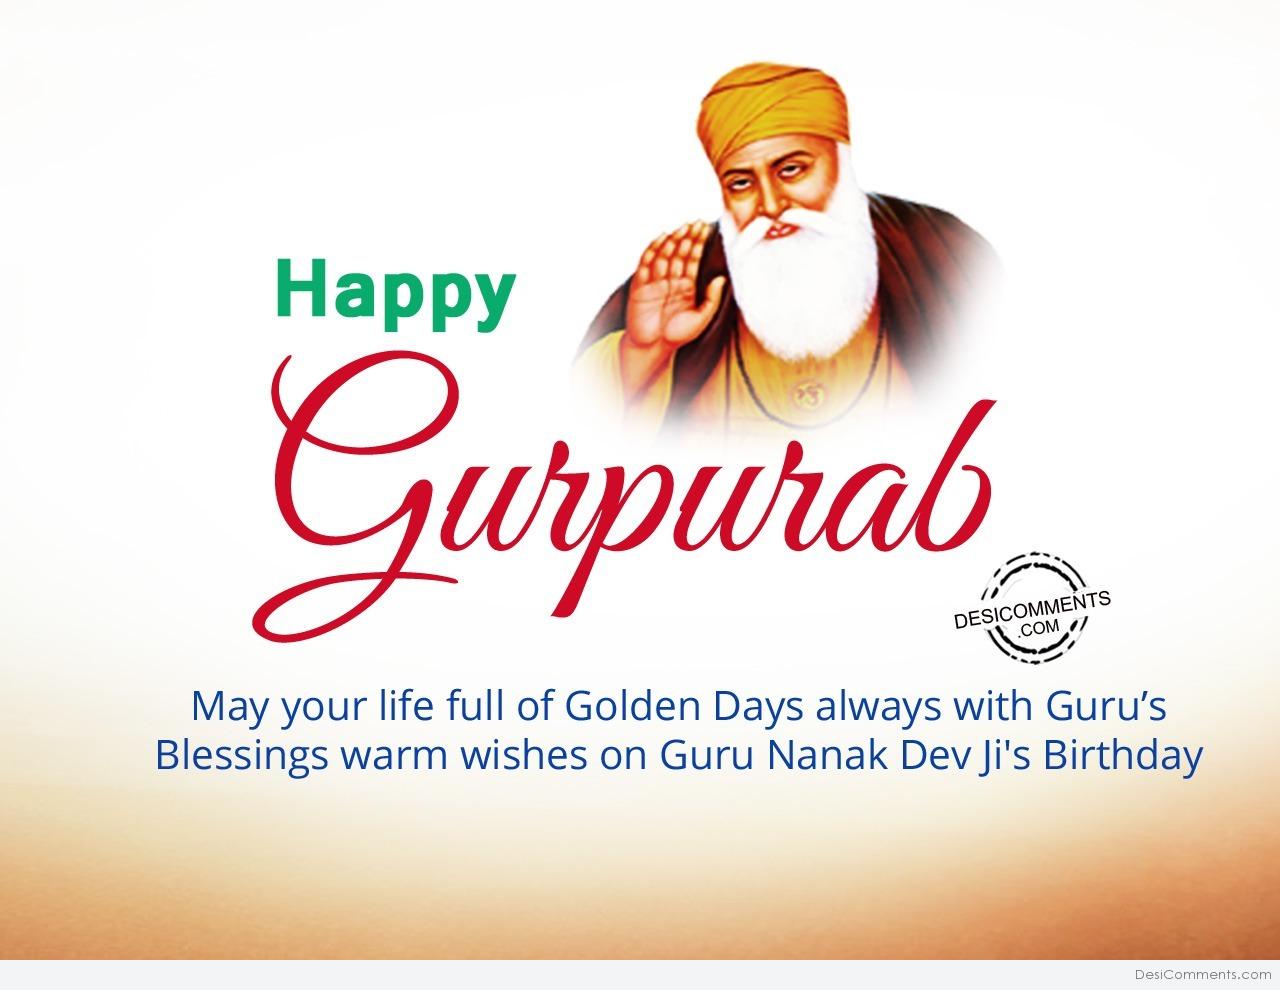 Happy Gurpurab, Guru Nanak Dev Ji - DesiComments.com